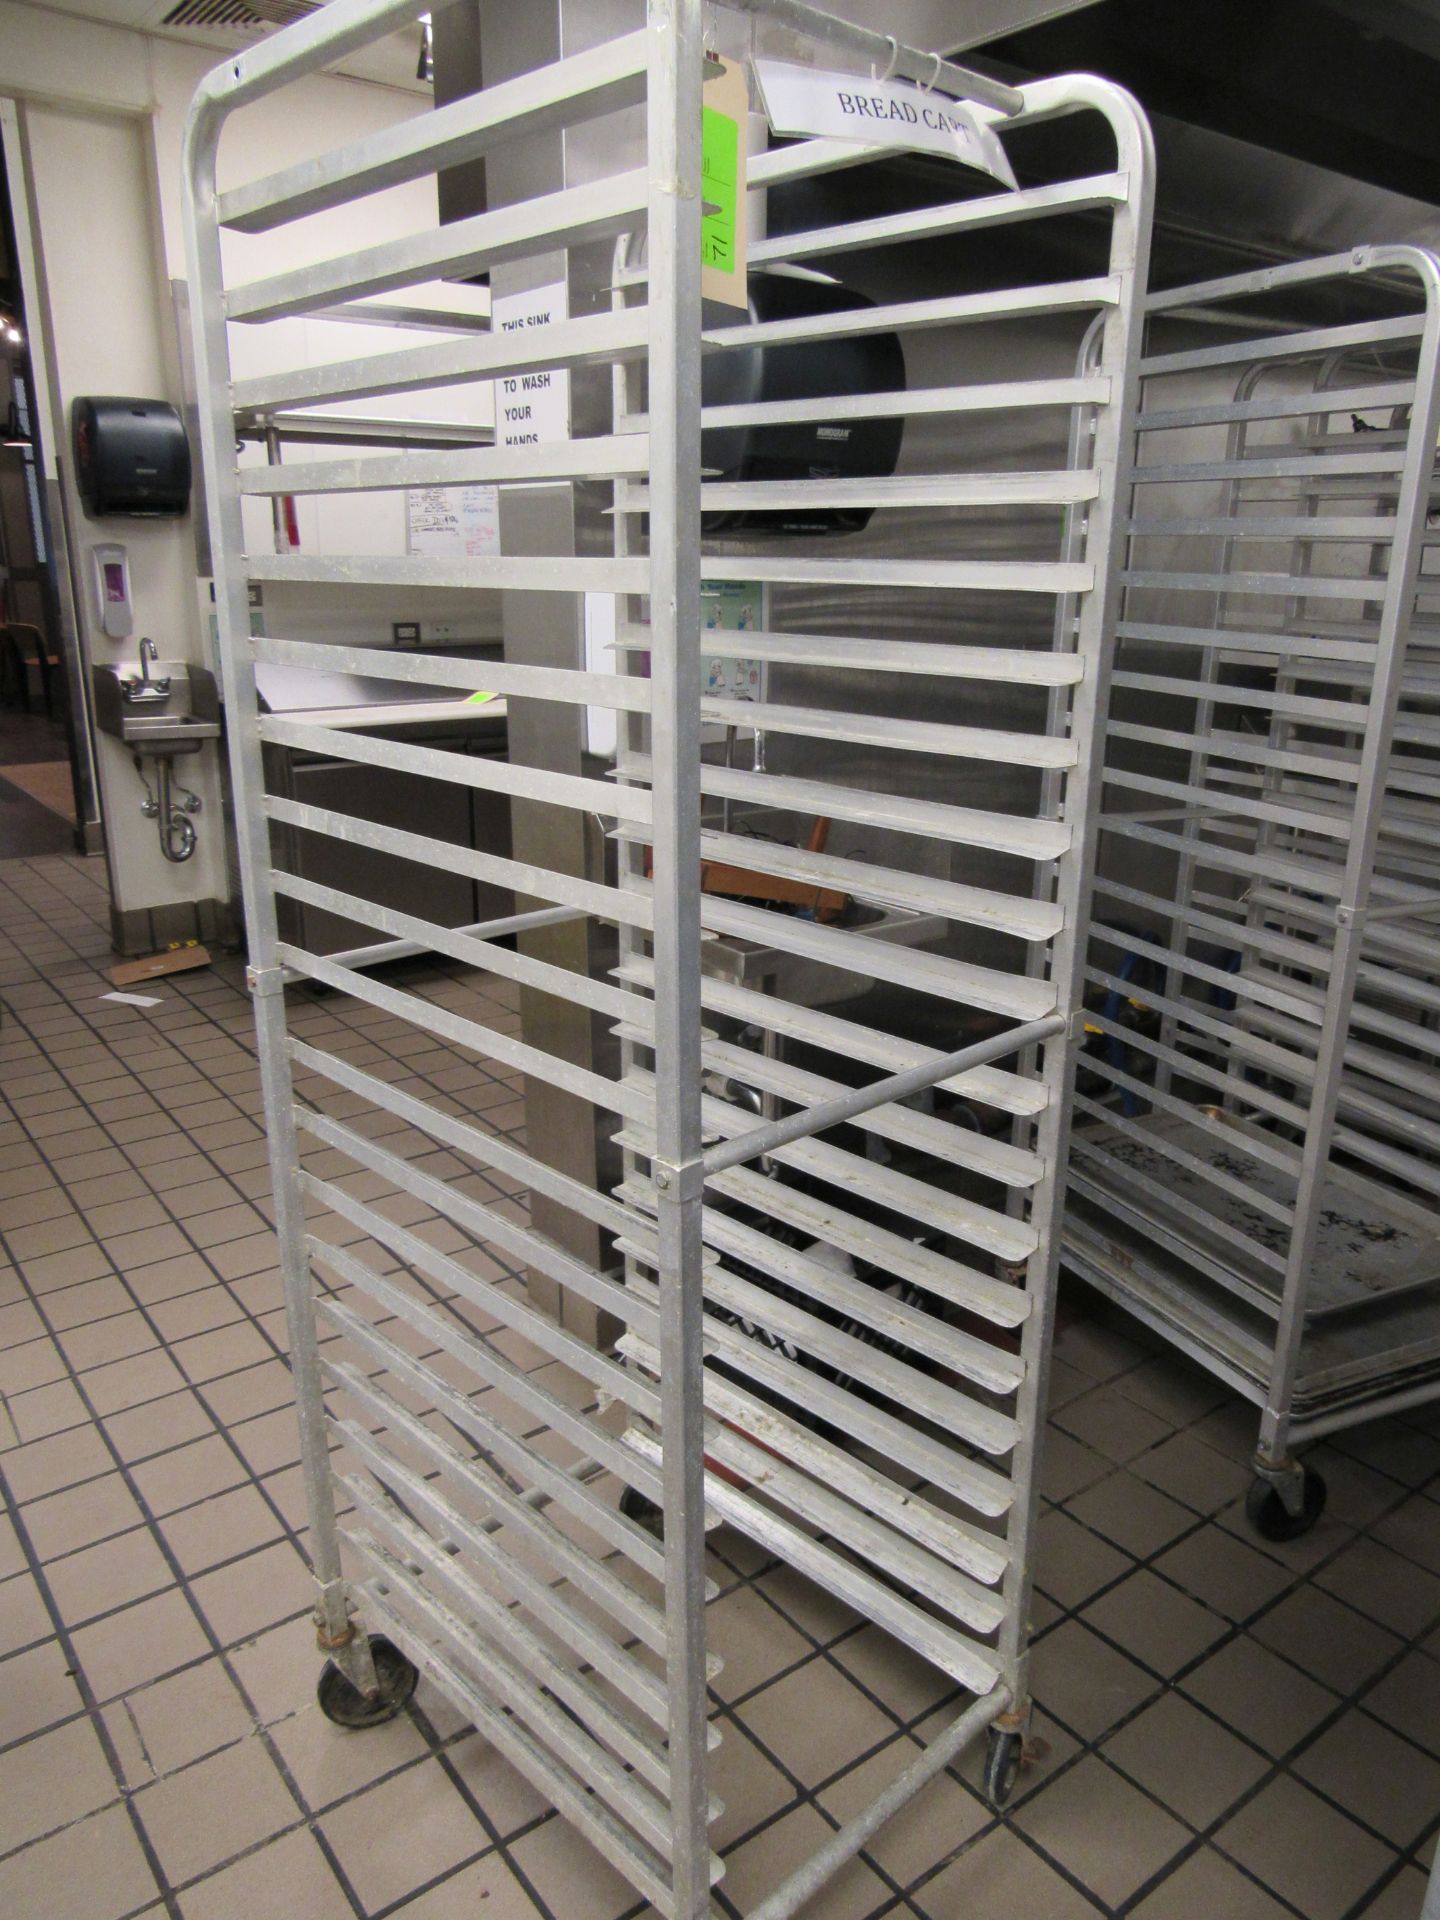 Royal sheet pan rack on casters